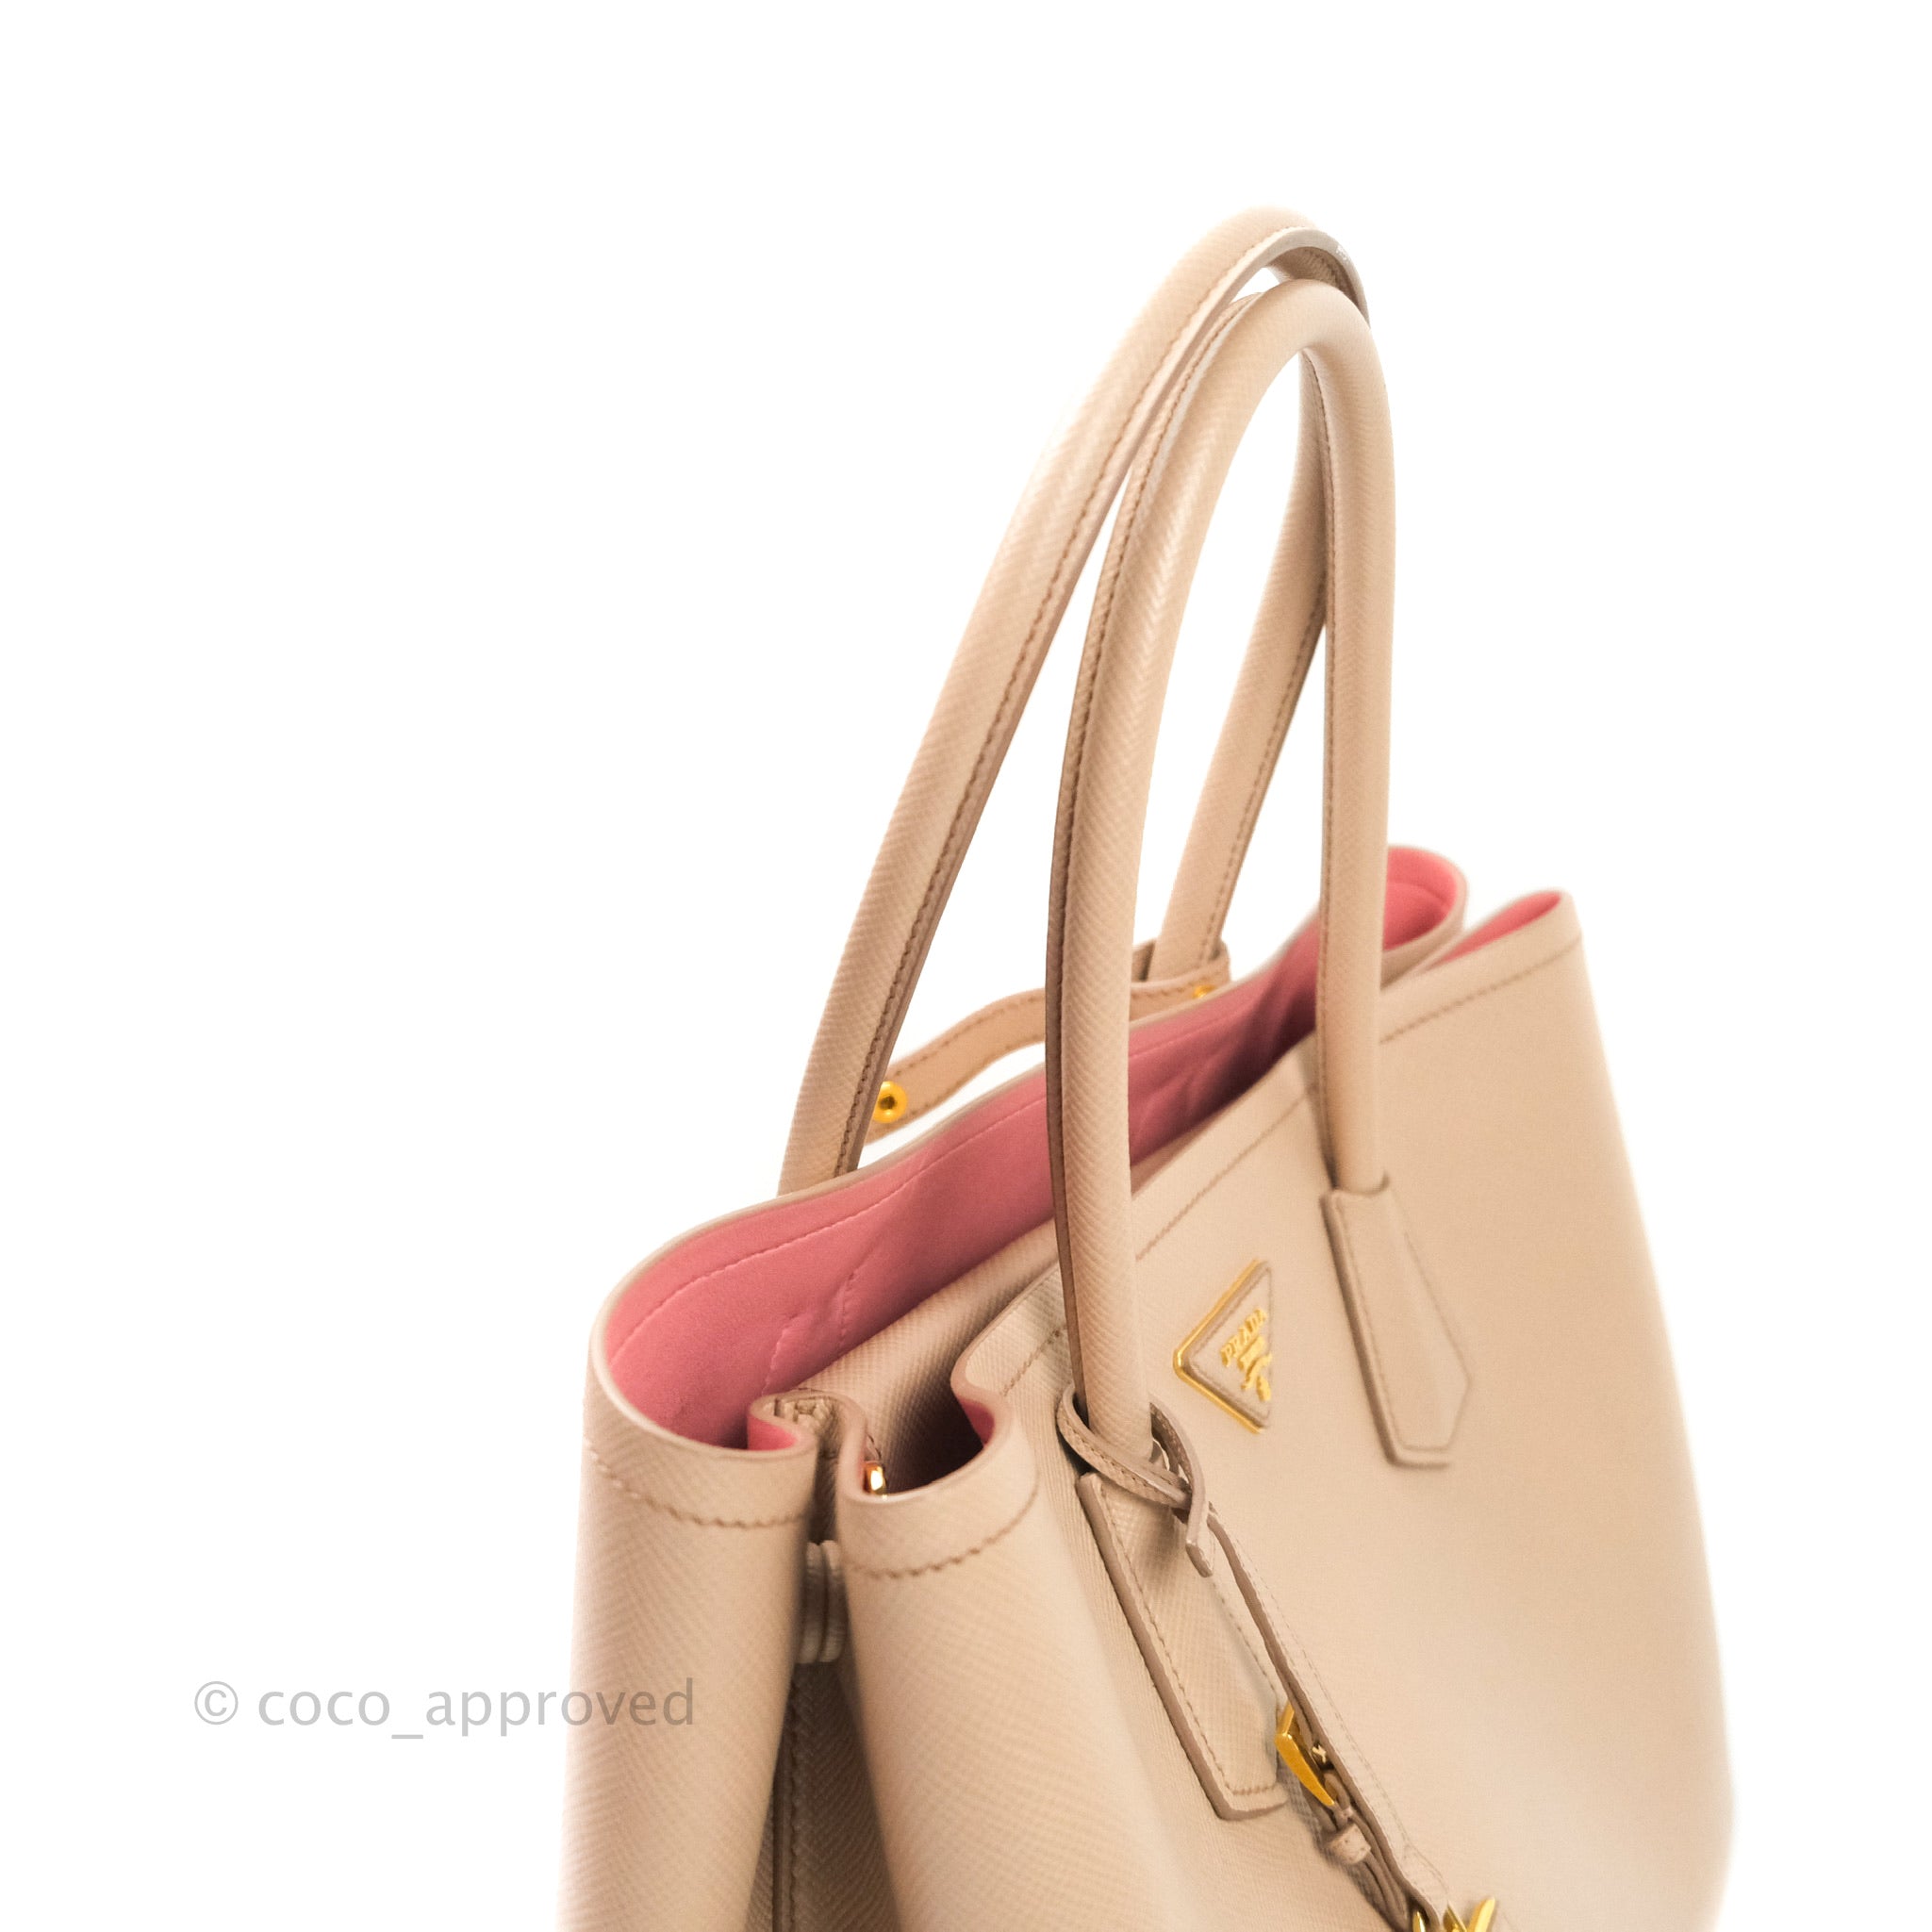 Prada Saffiano Cuir Double Bag - Pink Shoulder Bags, Handbags